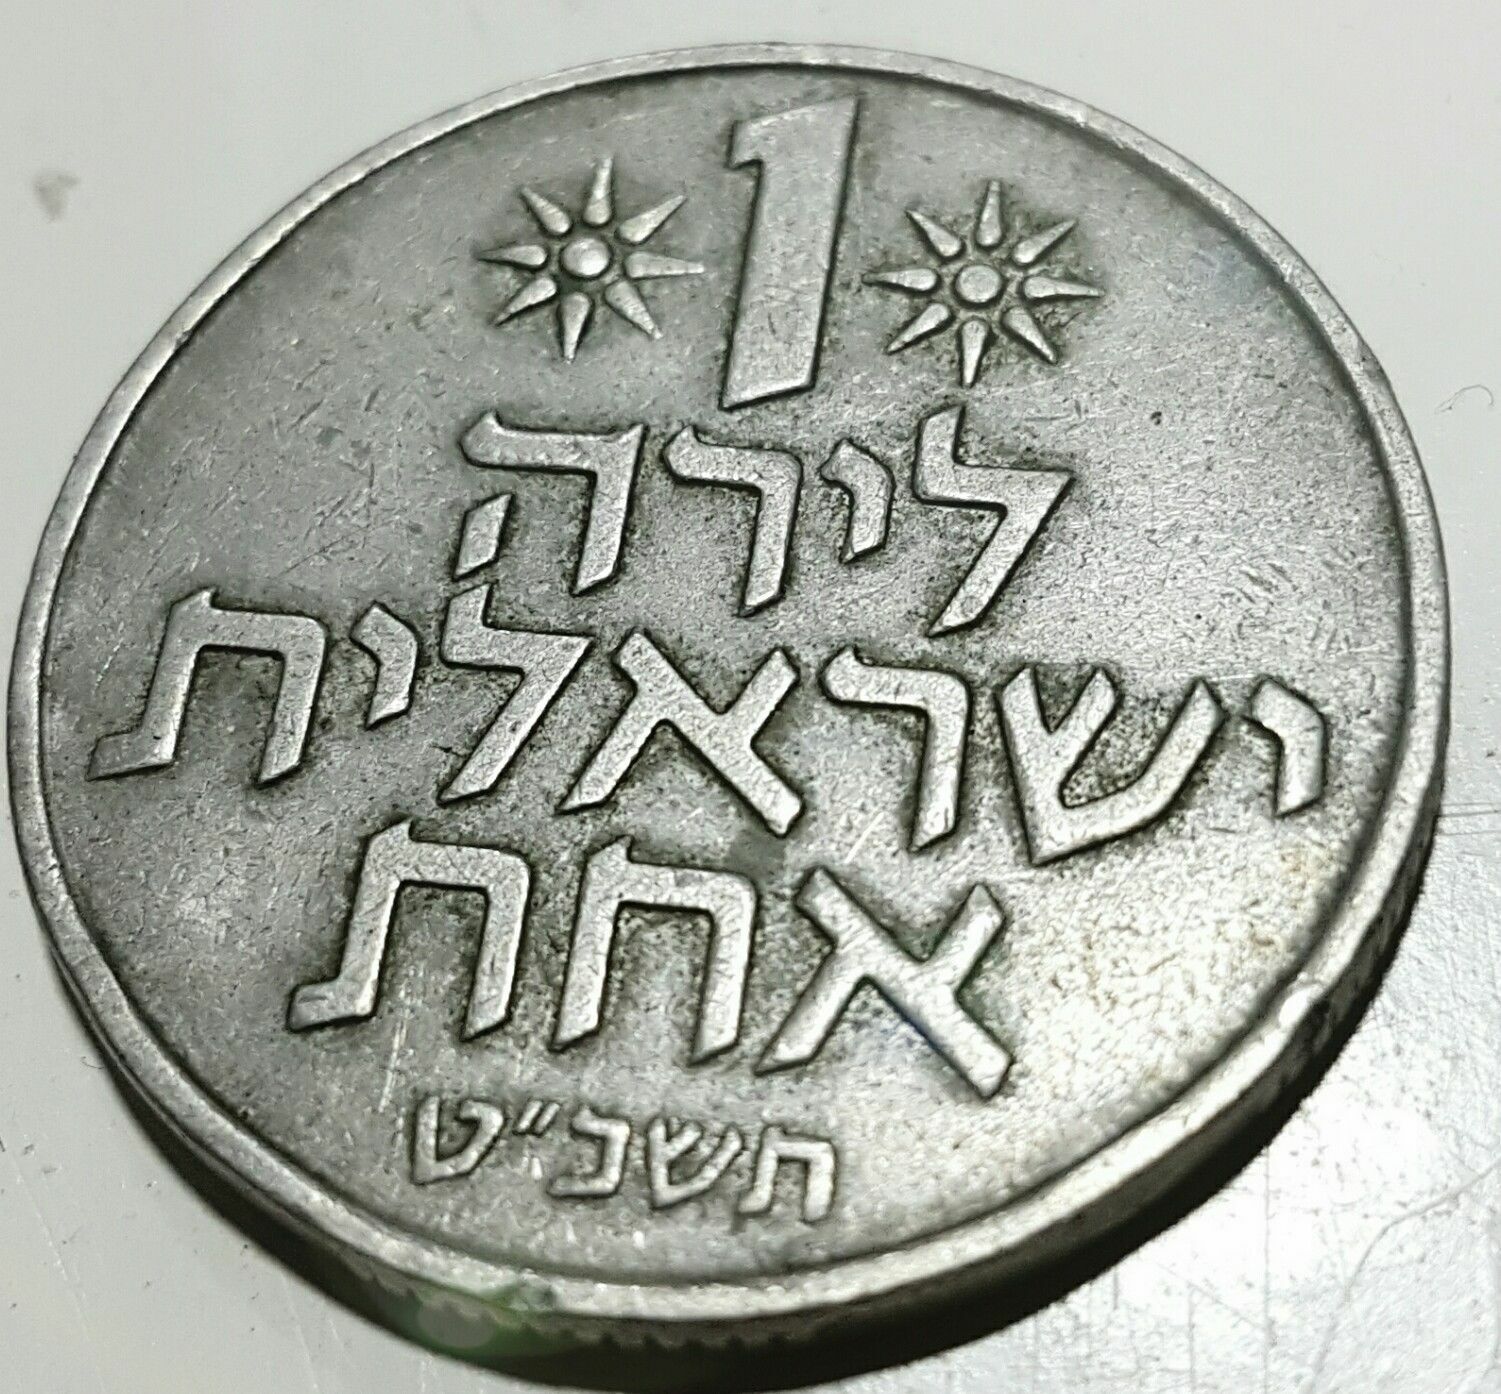 Israel Complete Set Coins Lot of 30 Coin Pruta Sheqalim Sheqel Agorot Since 1949 Без бренда - фотография #8